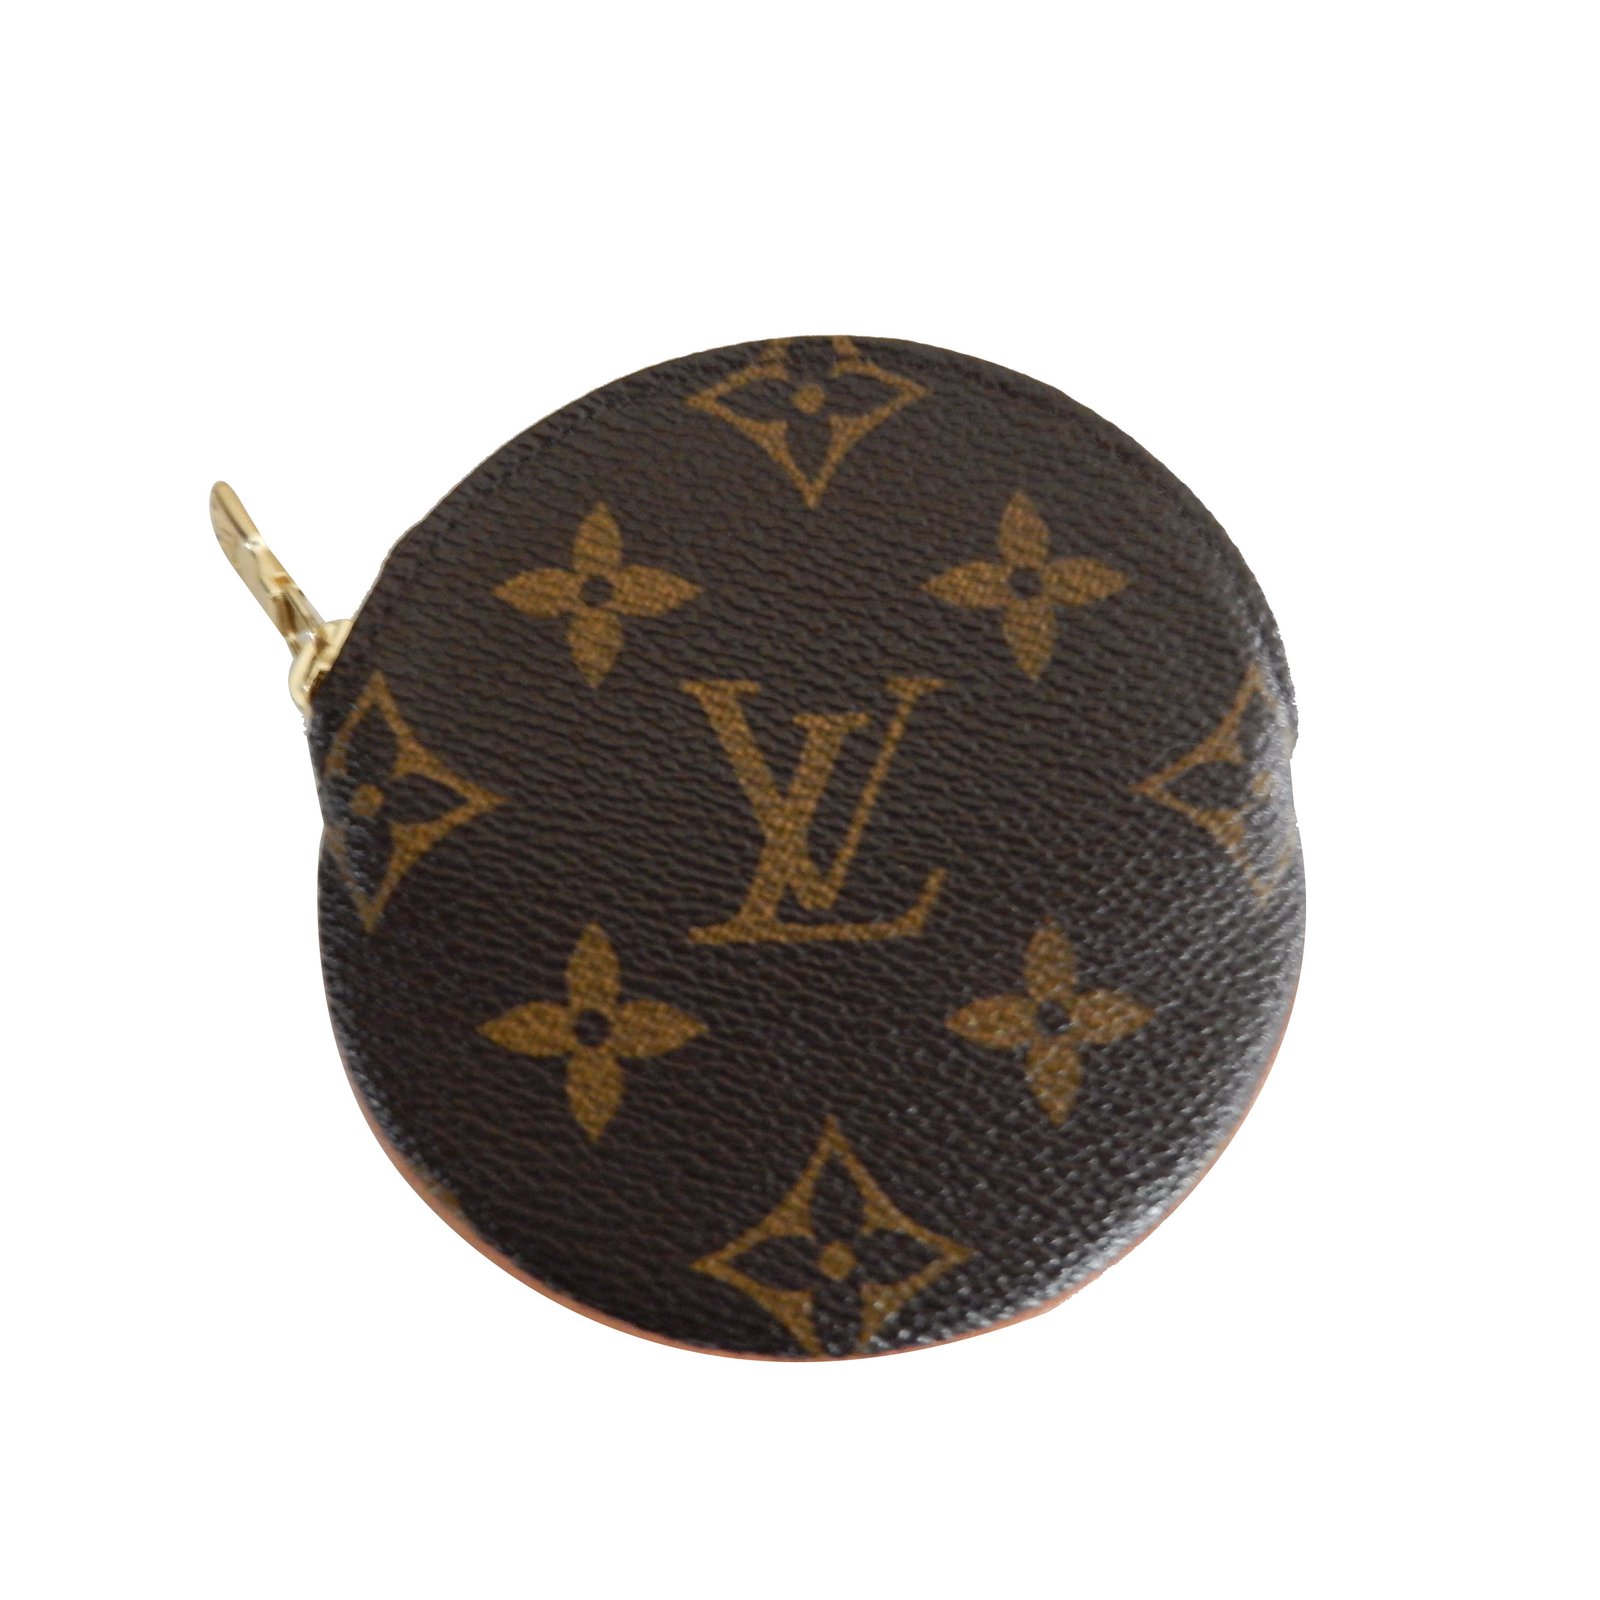 Monederos Louis Vuitton Originales